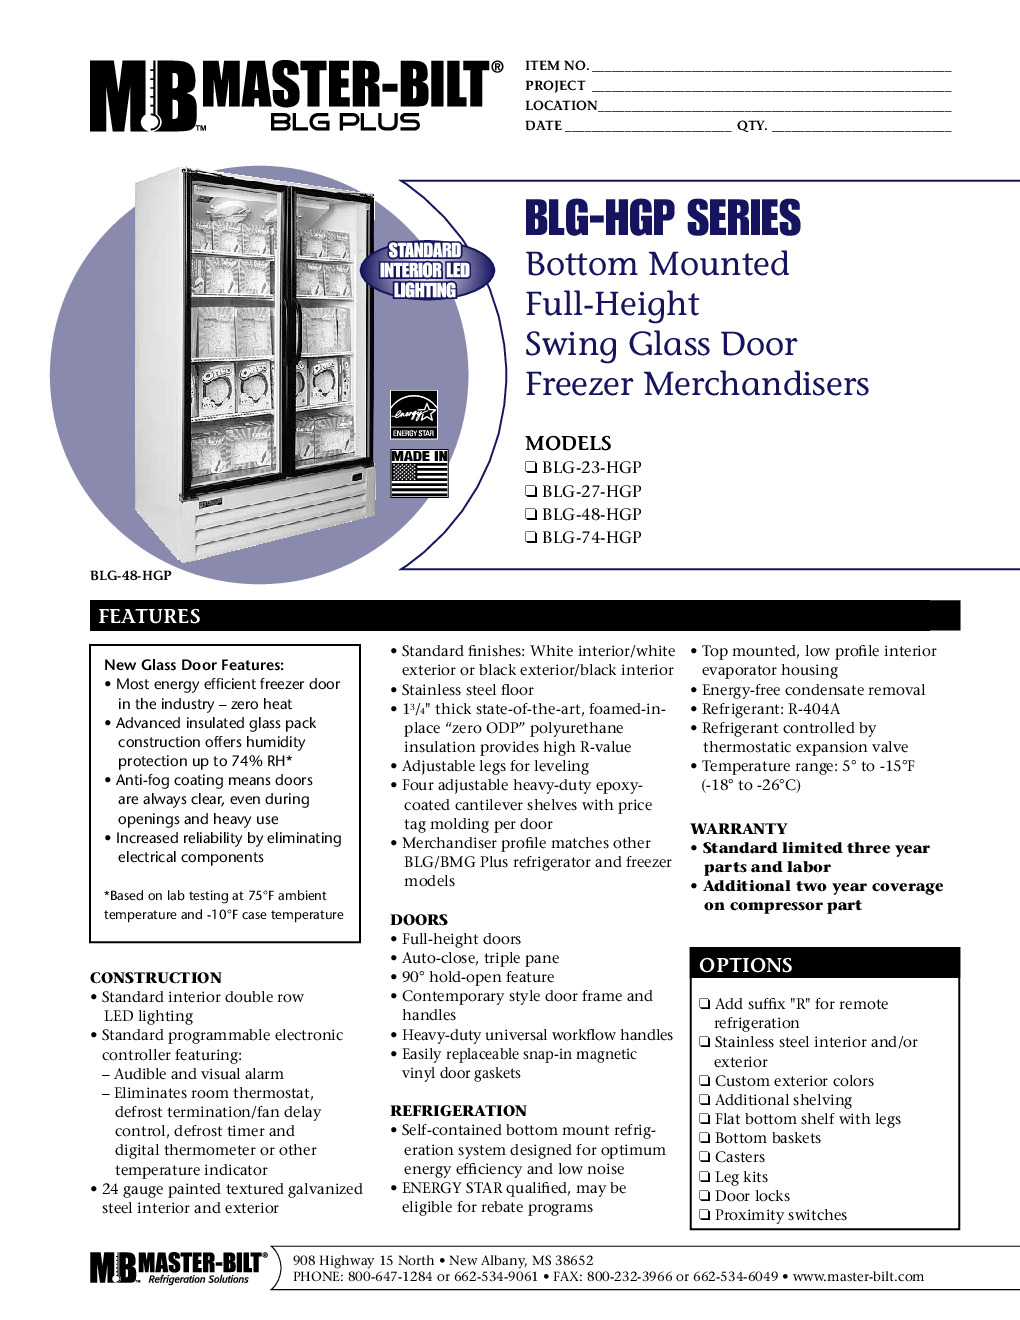 Master-Bilt BLG-27-HGP Merchandiser Freezer